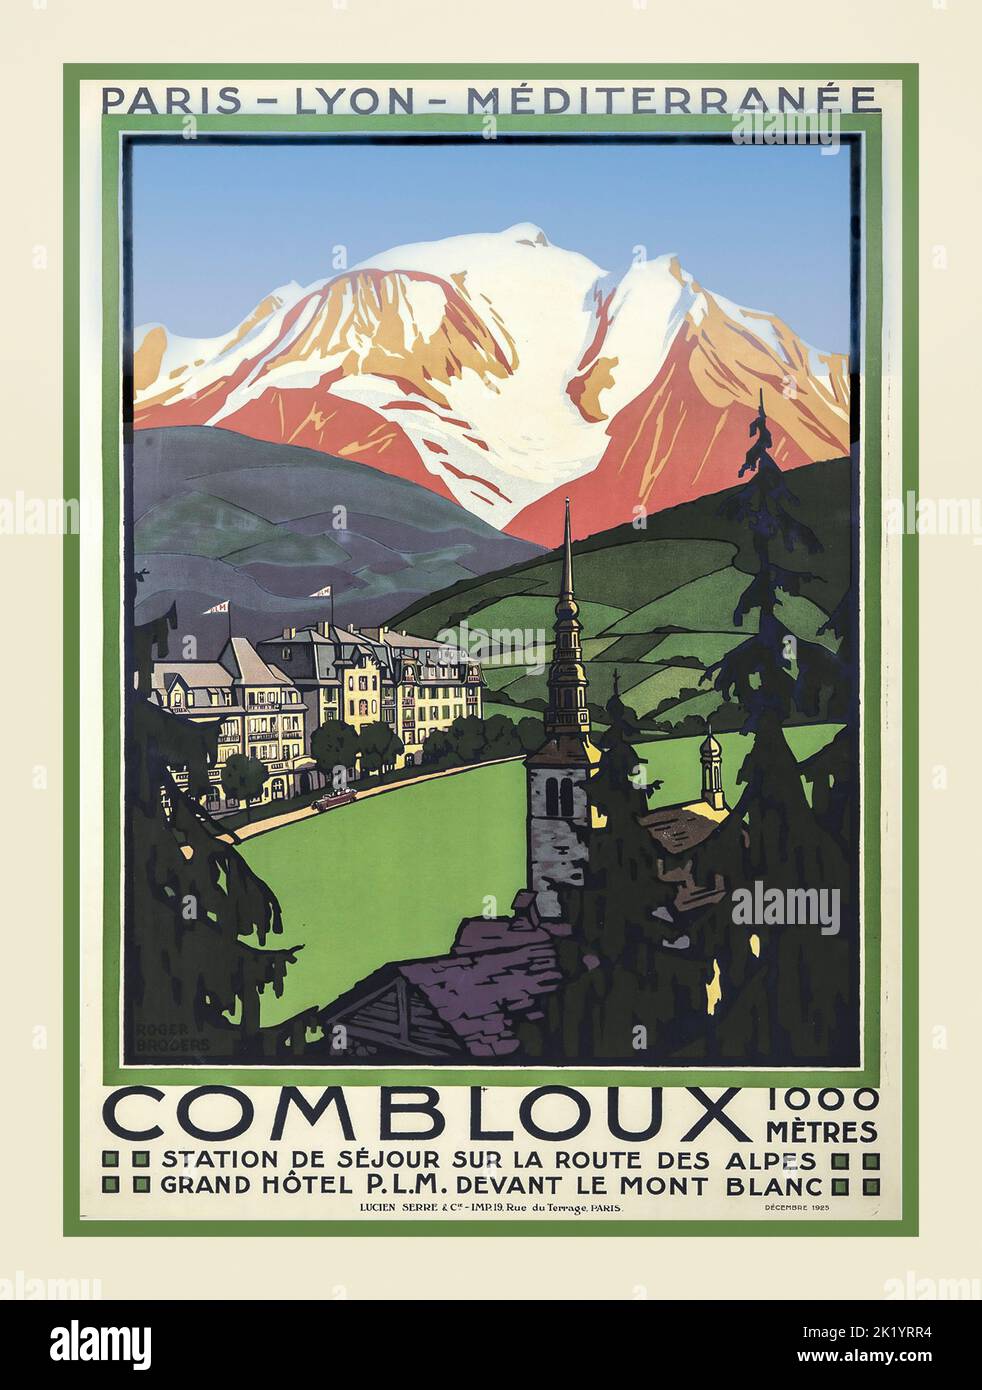 Vintage Travel Poster 1900s 'COMBLOUX' PLM French Rail Poster. Grand Hotel PLM Devant Le Mont Blanc Route des Alpes at 1000 metres French France Stock Photo